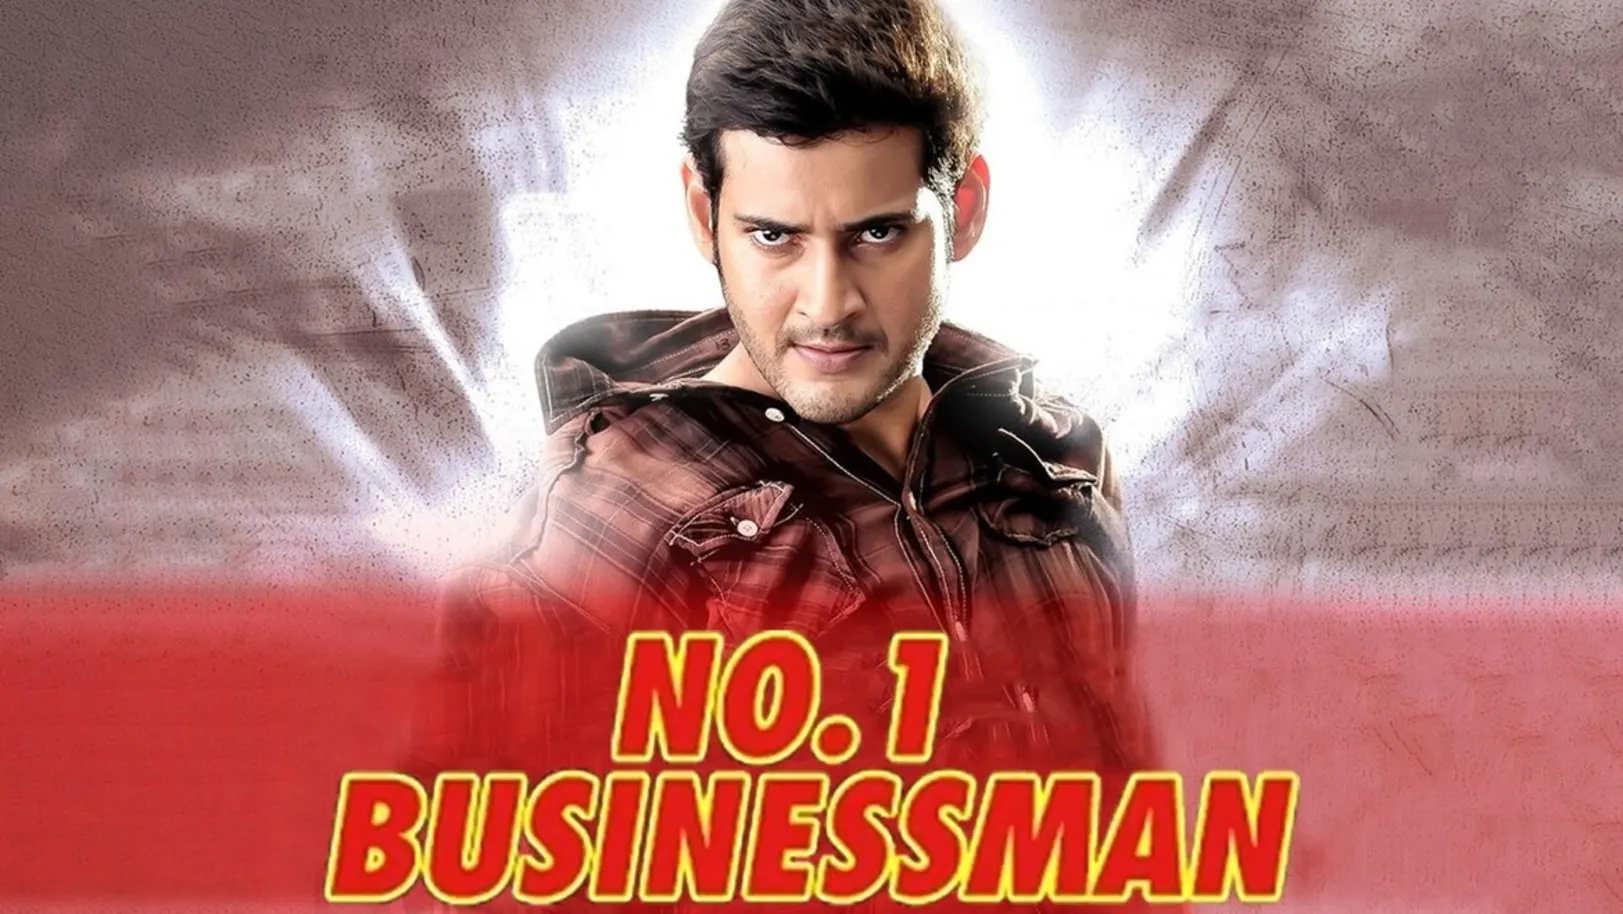 No 1 Businessman Streaming Now On Zee Cinema